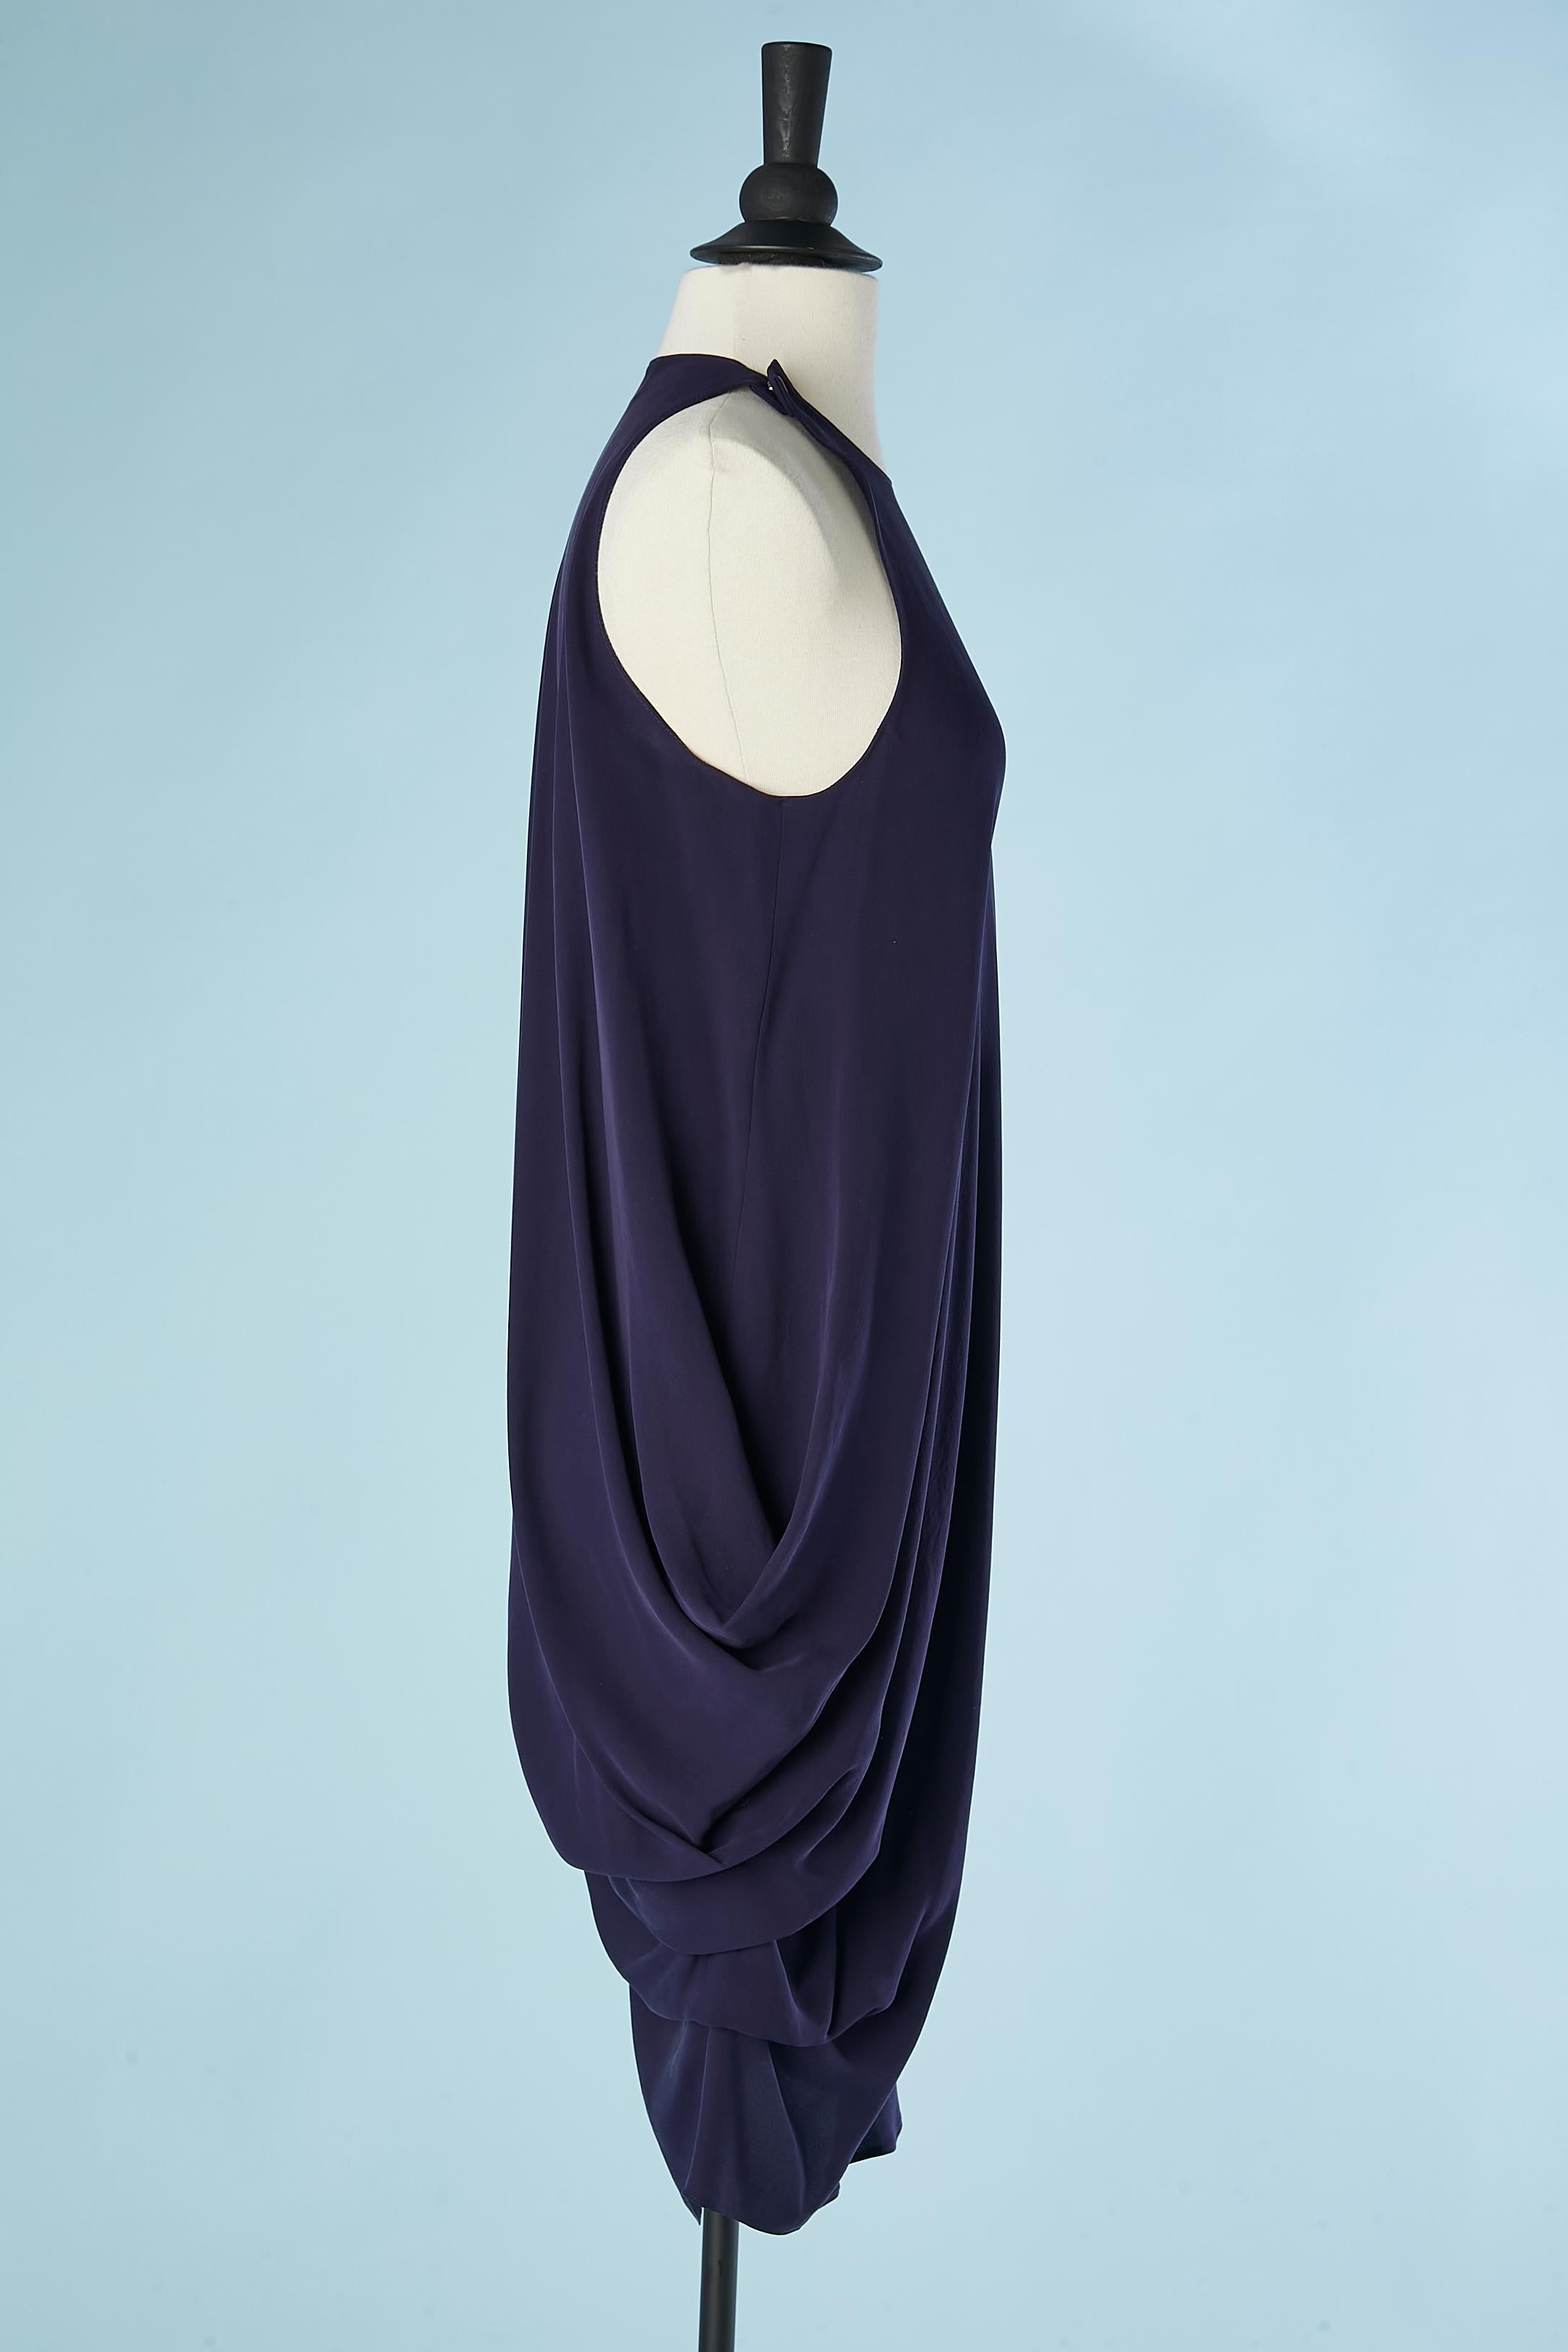 Asymmetrical navy blue silk cocktail dress Lanvin by Alber Elbaz SS 2012 2